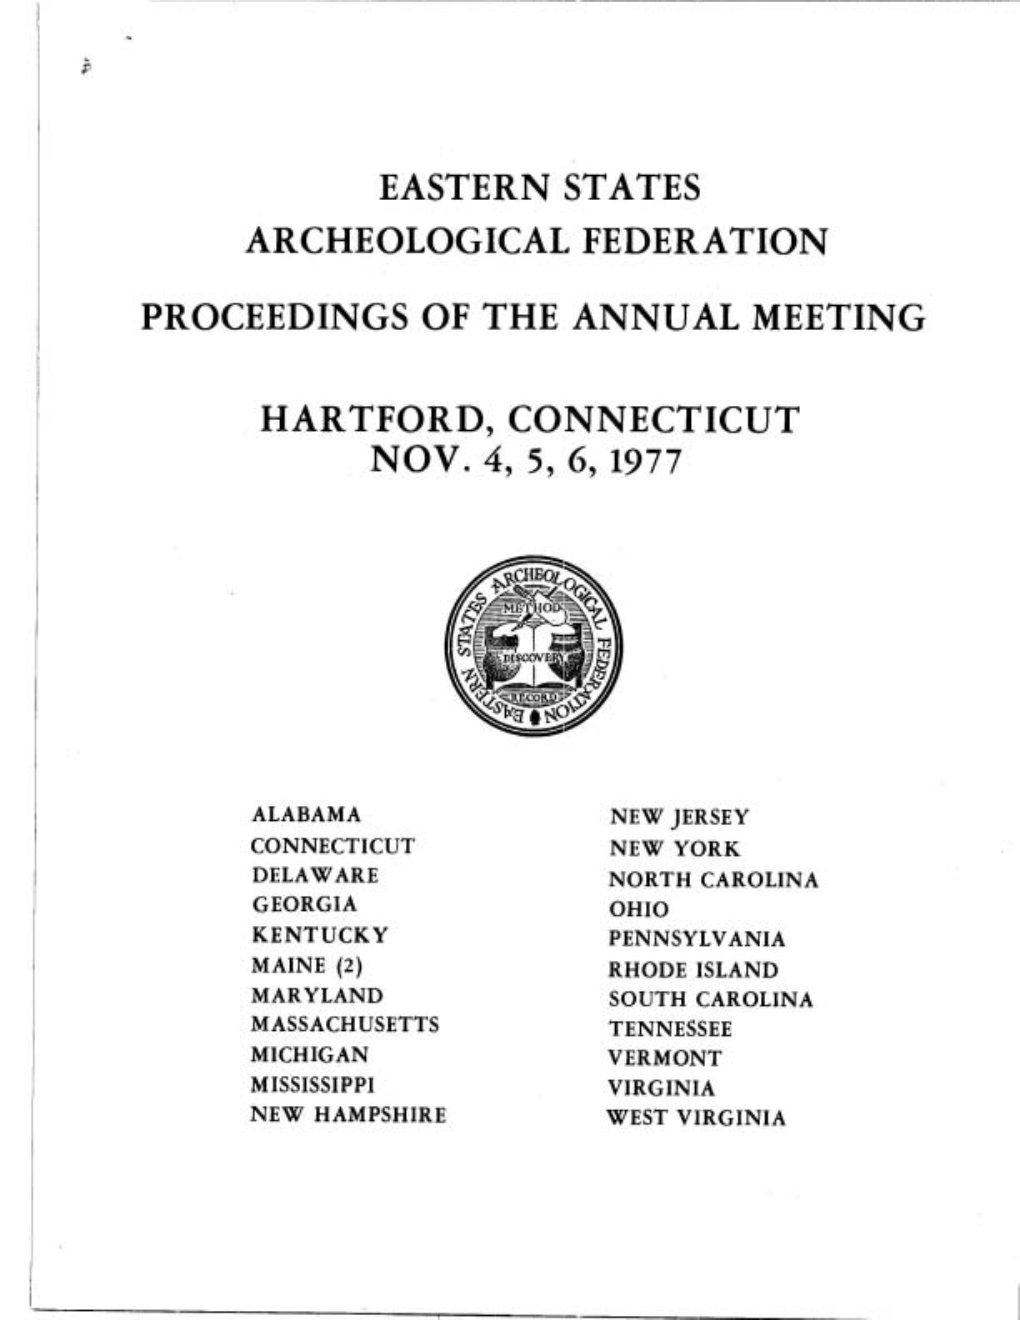 ESAF Bulletin 1978